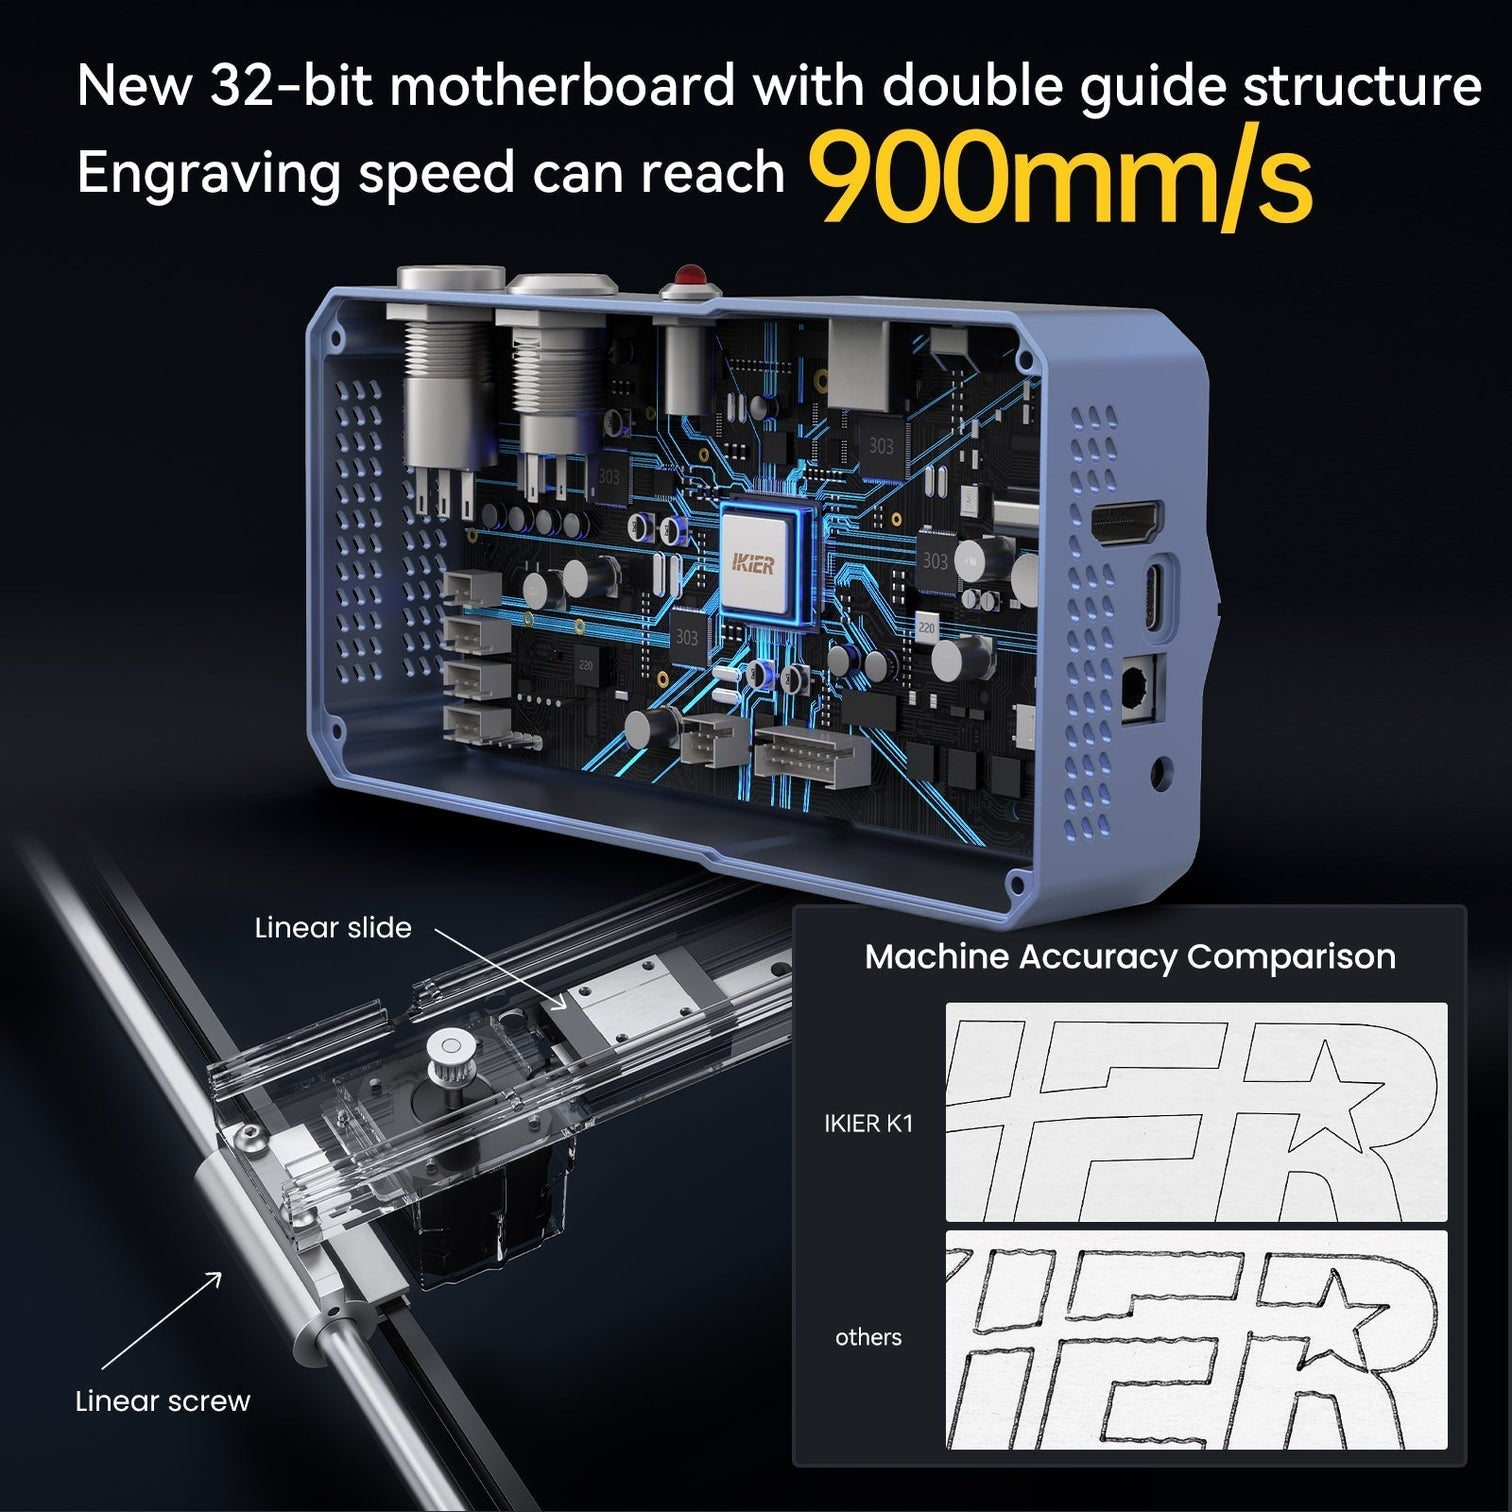 iKier 1064nm 20W Fiber Laser Module for K1 Series Machines